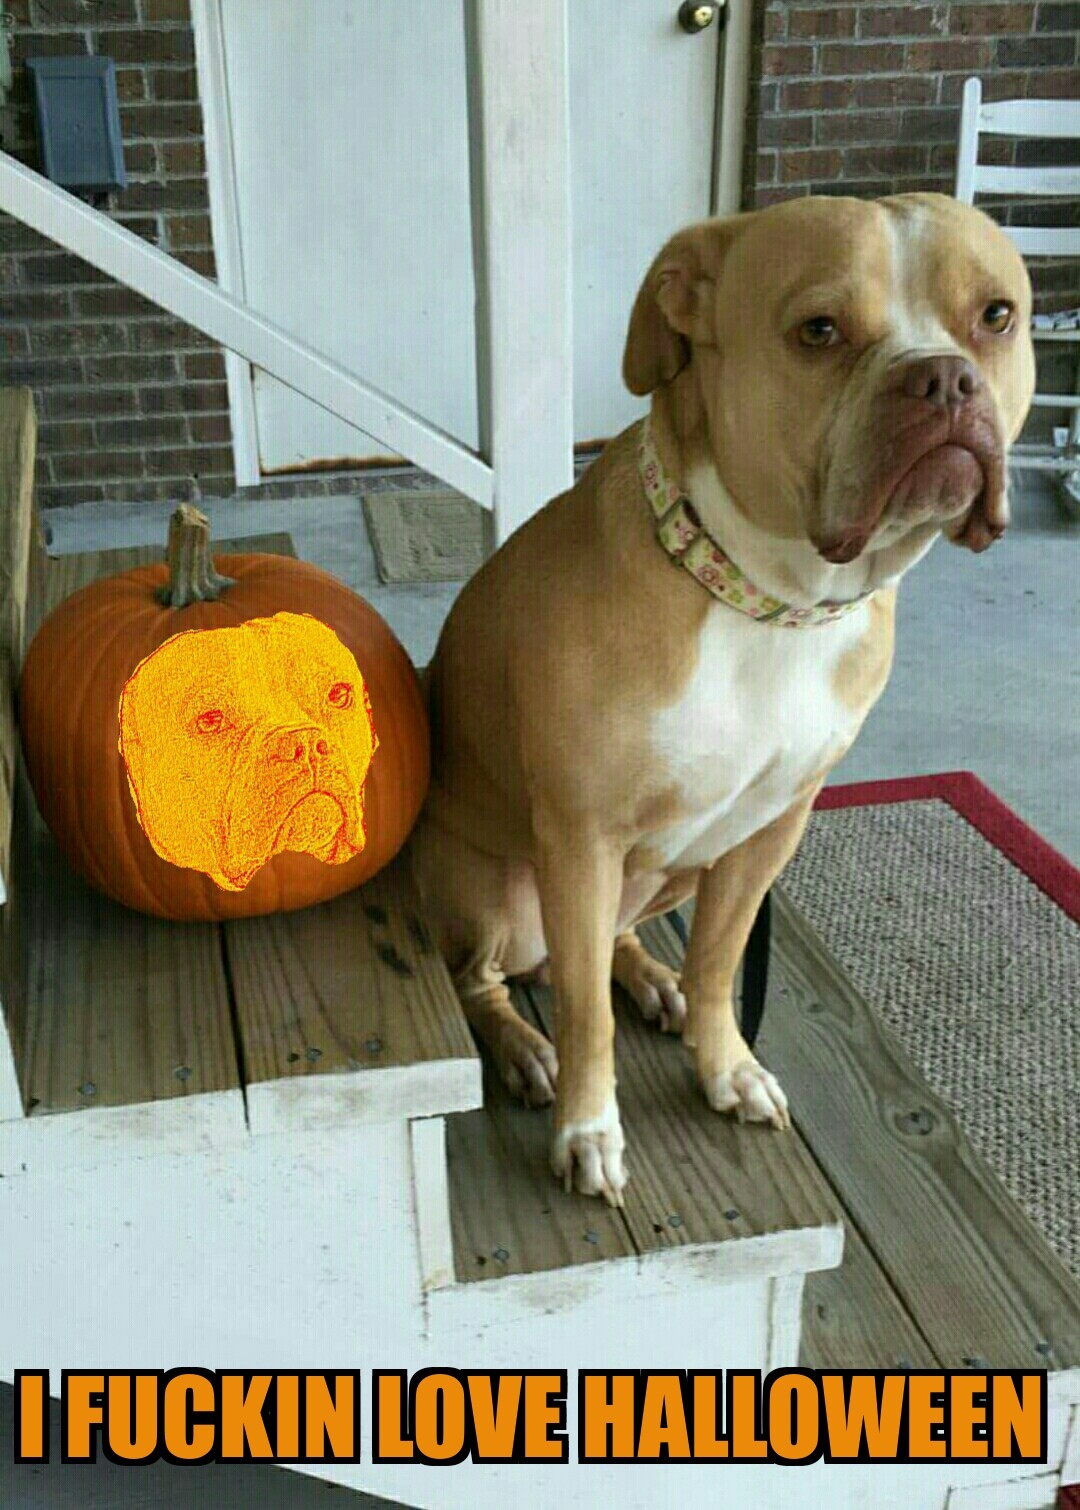 Paris carved a pumpkin - meme